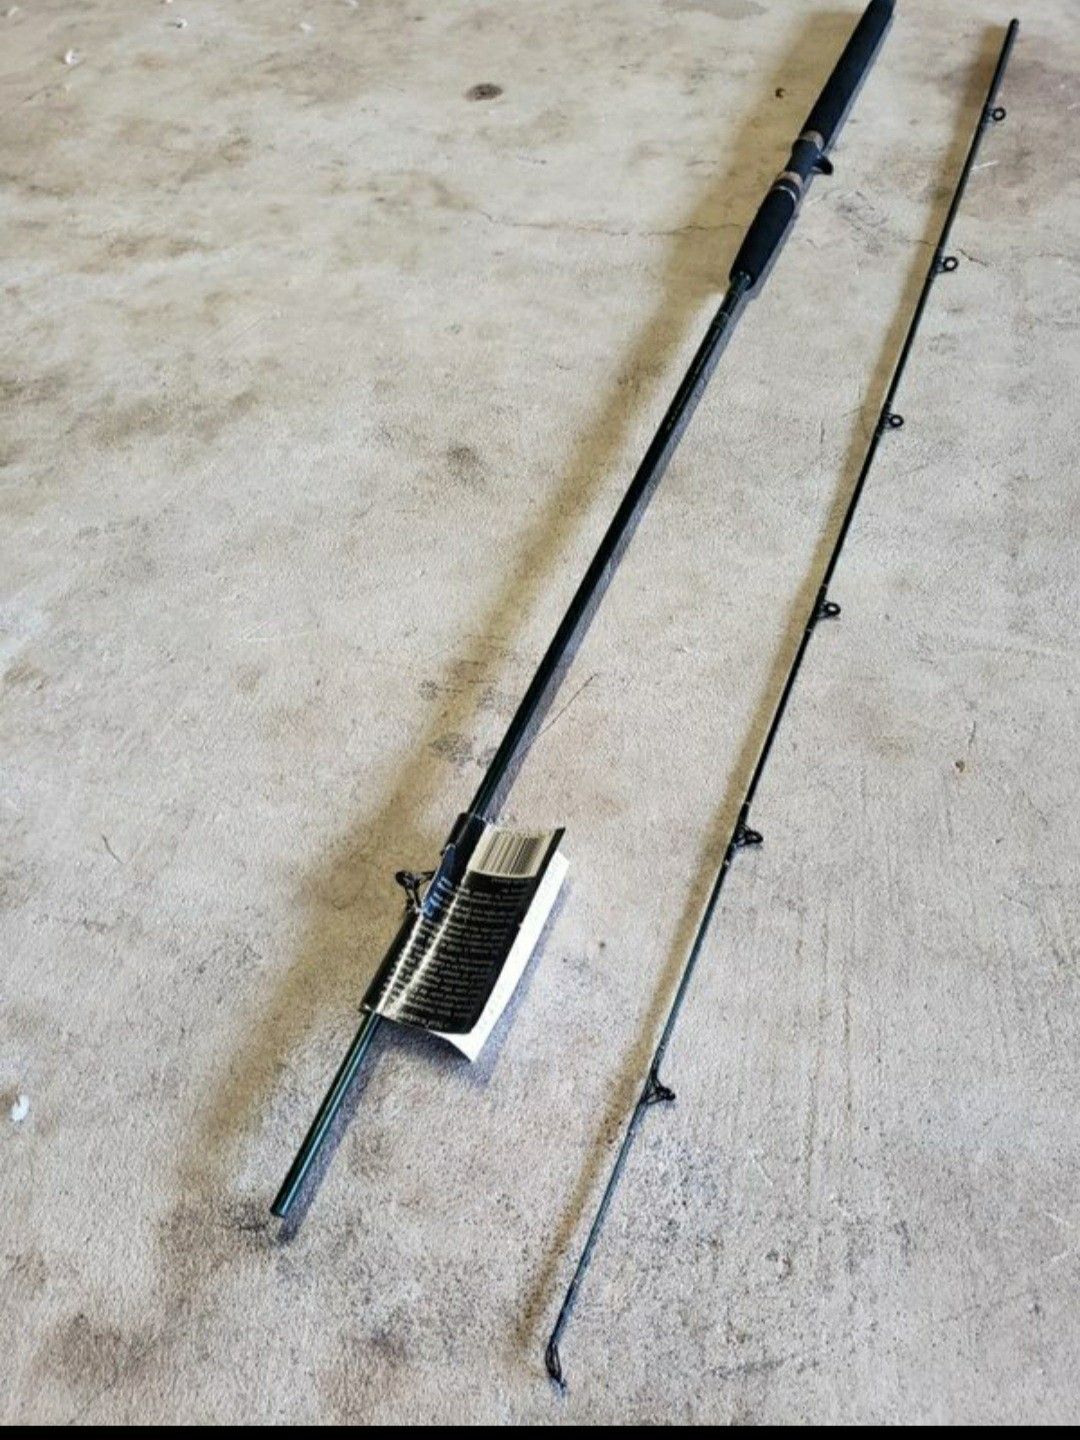 New Fishing pole, Rod Model 2368 - length 8.6